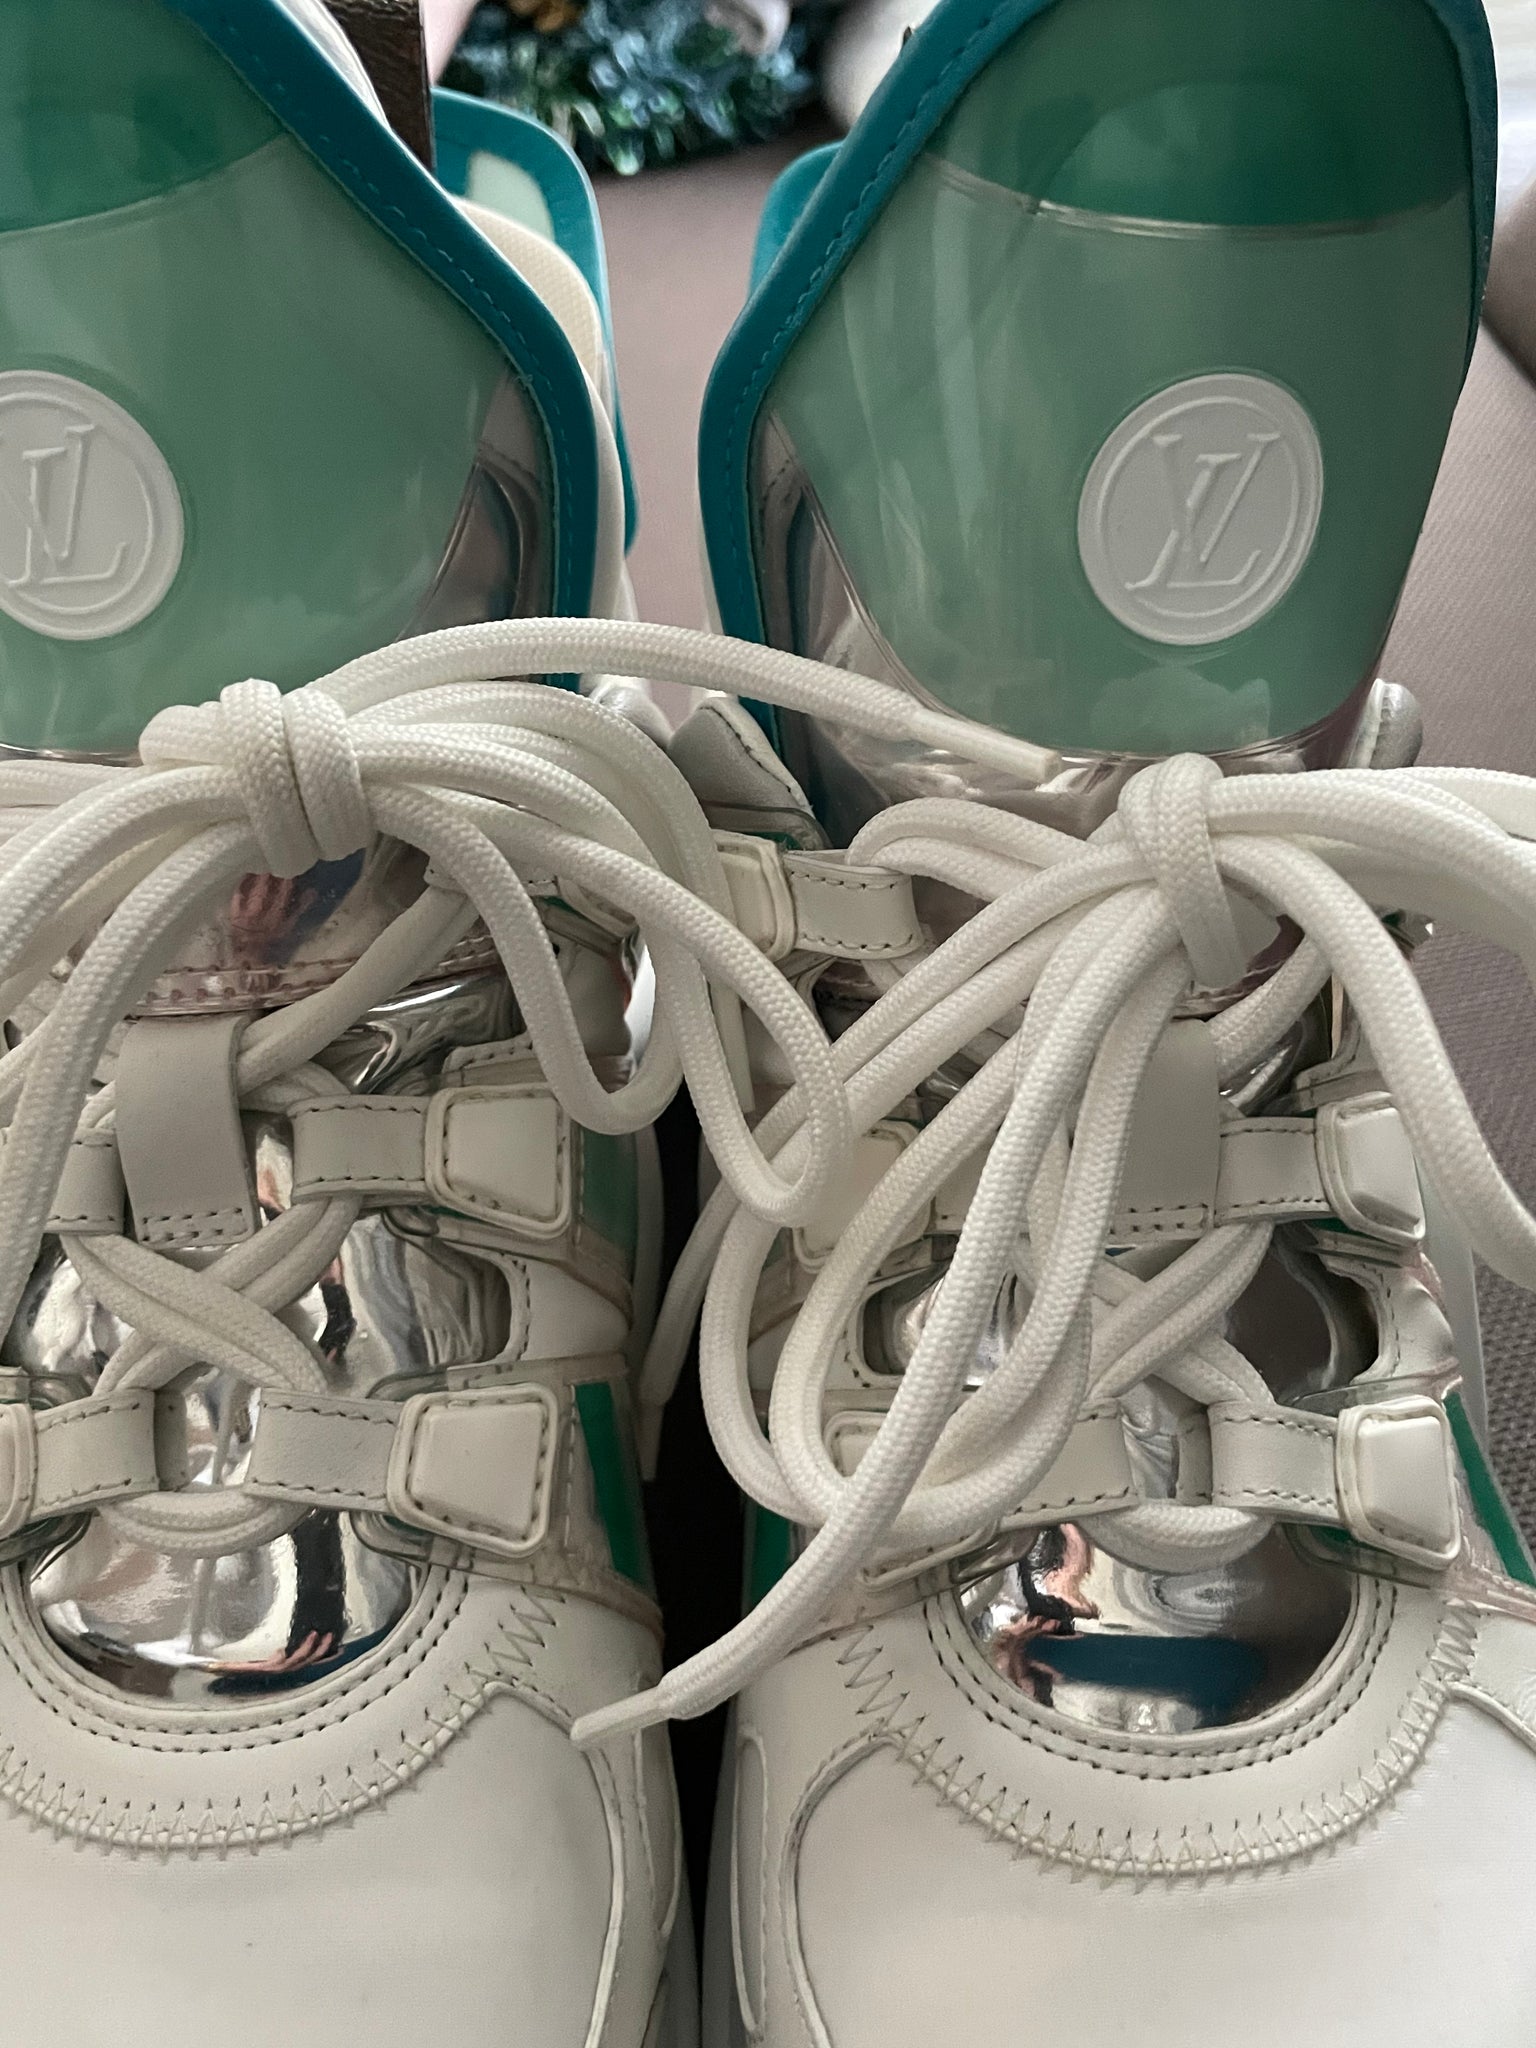 LOUIS VUITTON Archlight Sneakers in size 39, Women's Fashion